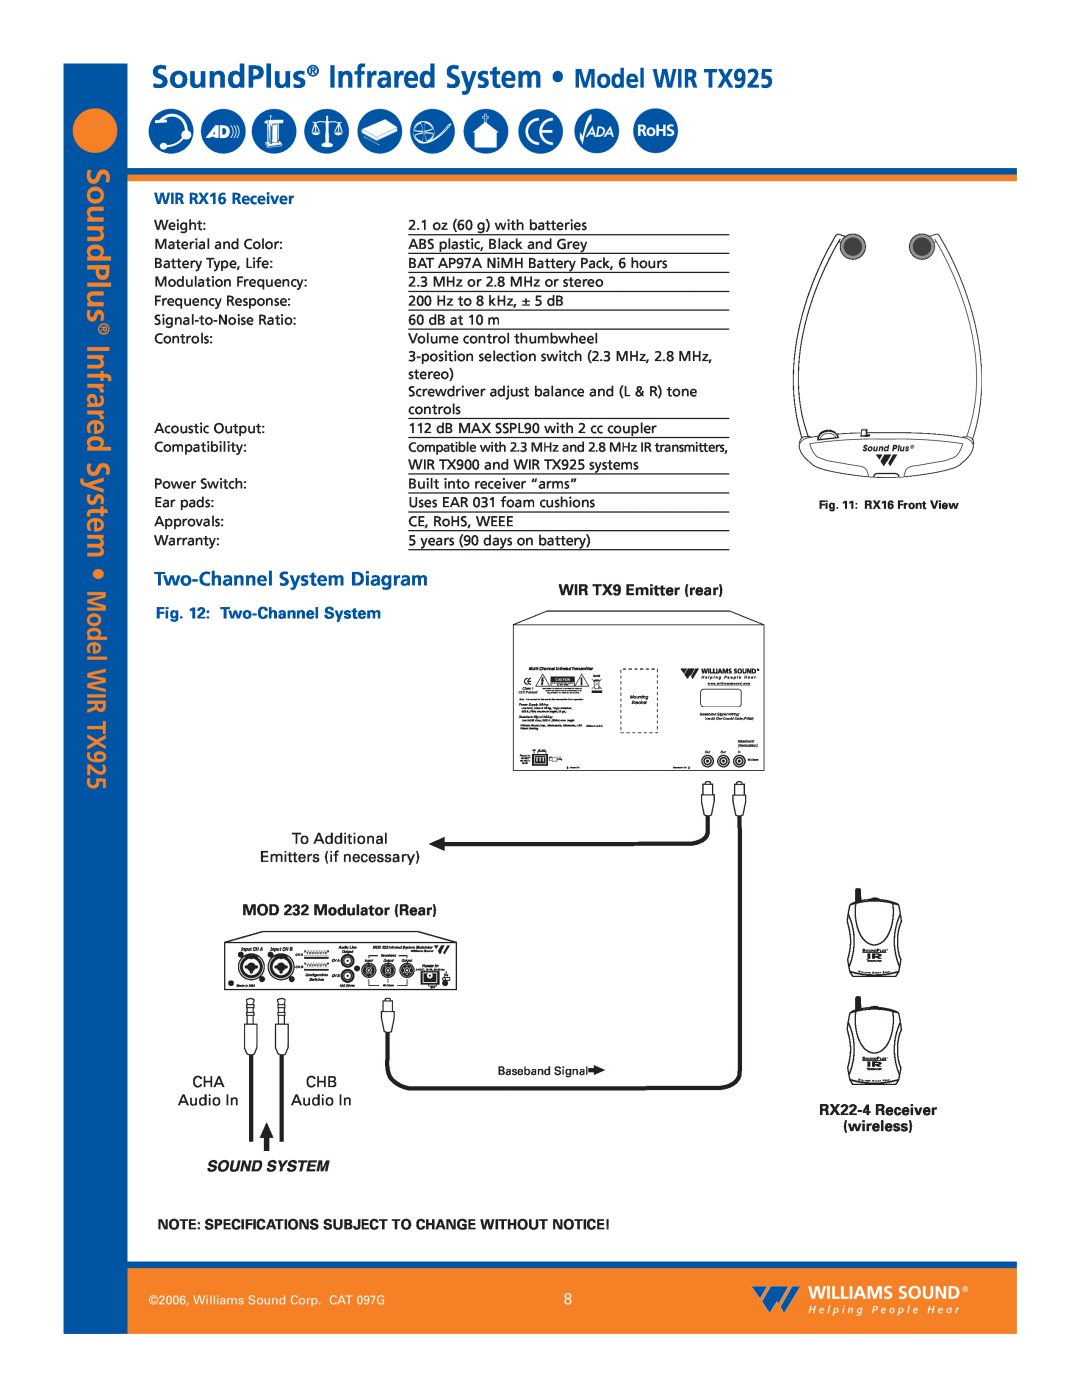 Williams Sound WIR TX925 SoundPlus Infrared System, Model, Two-ChannelSystem Diagram, WIR TX9 Emitter rear, Audio In 